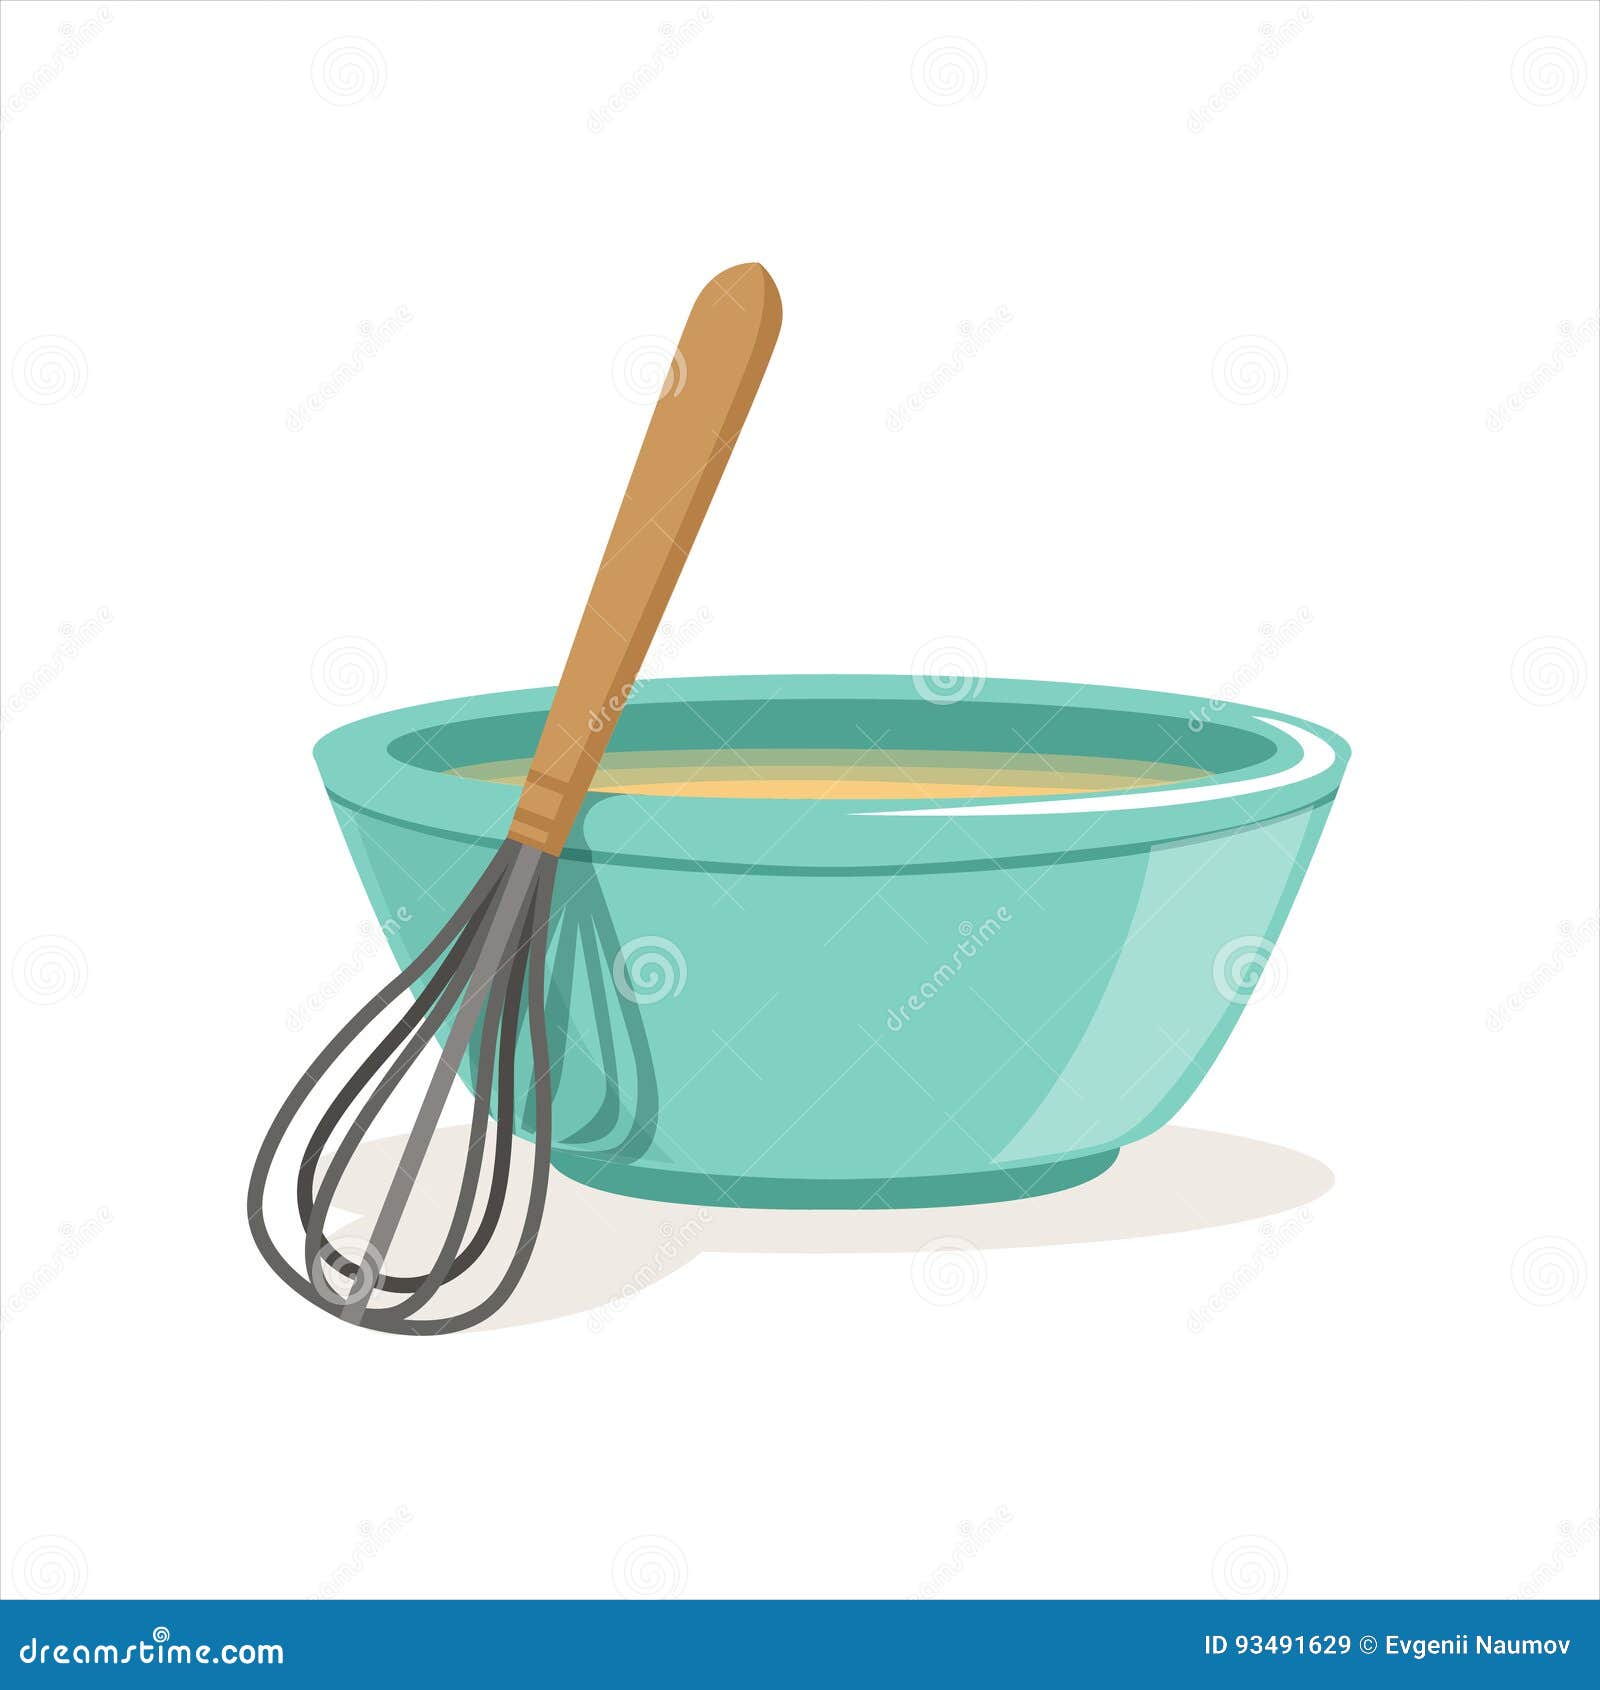 Baking Bowls, Jug, Wooden Spoons, Whisk